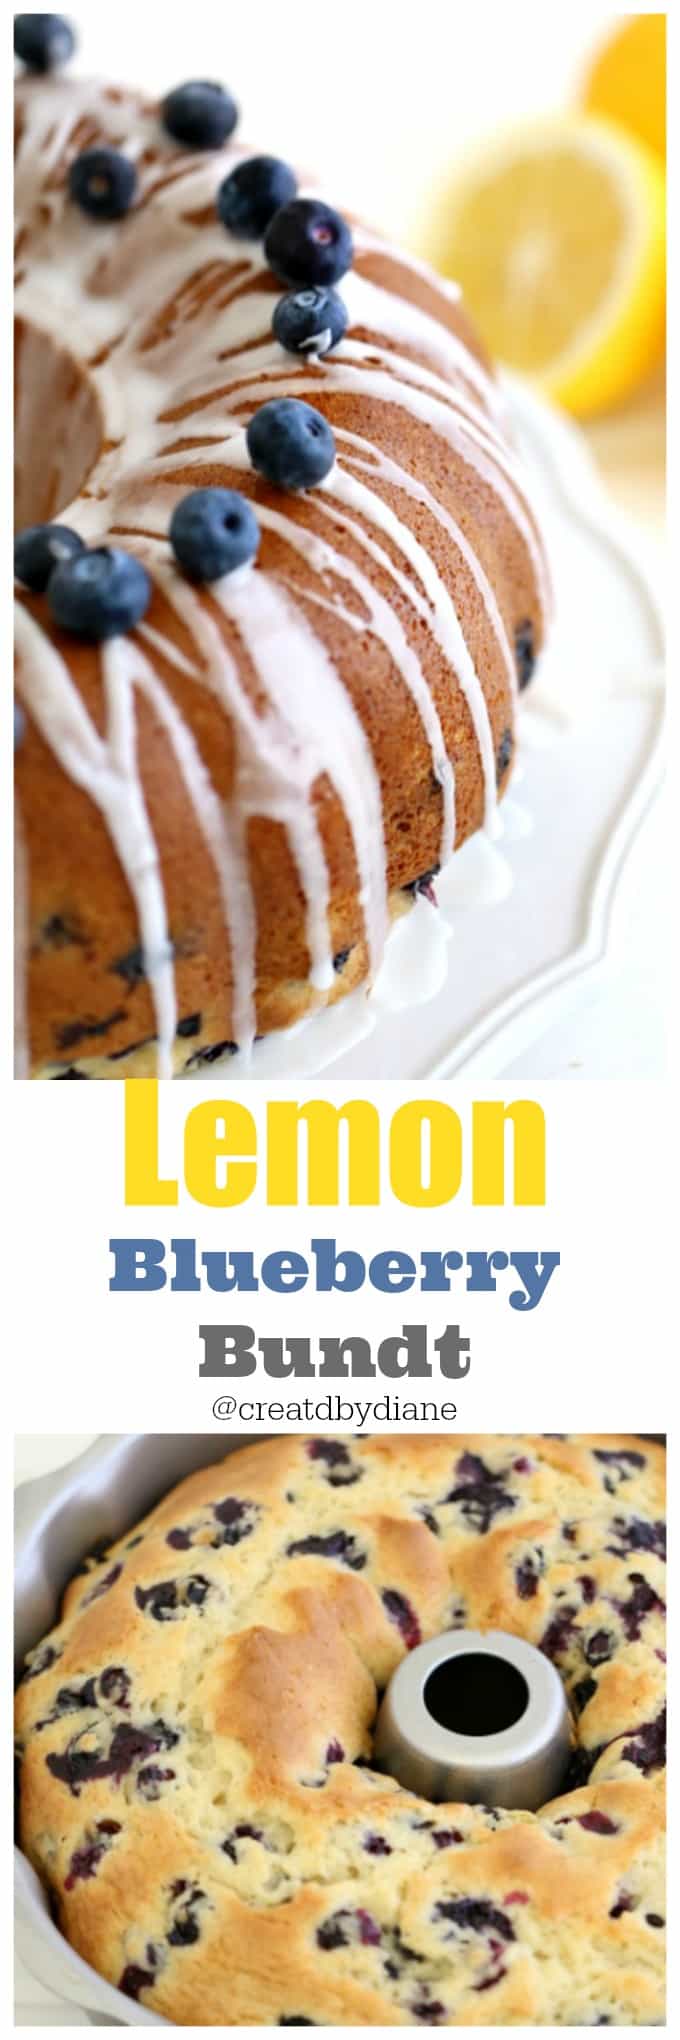 lemon blueberry bundt cake from @createdbydiane